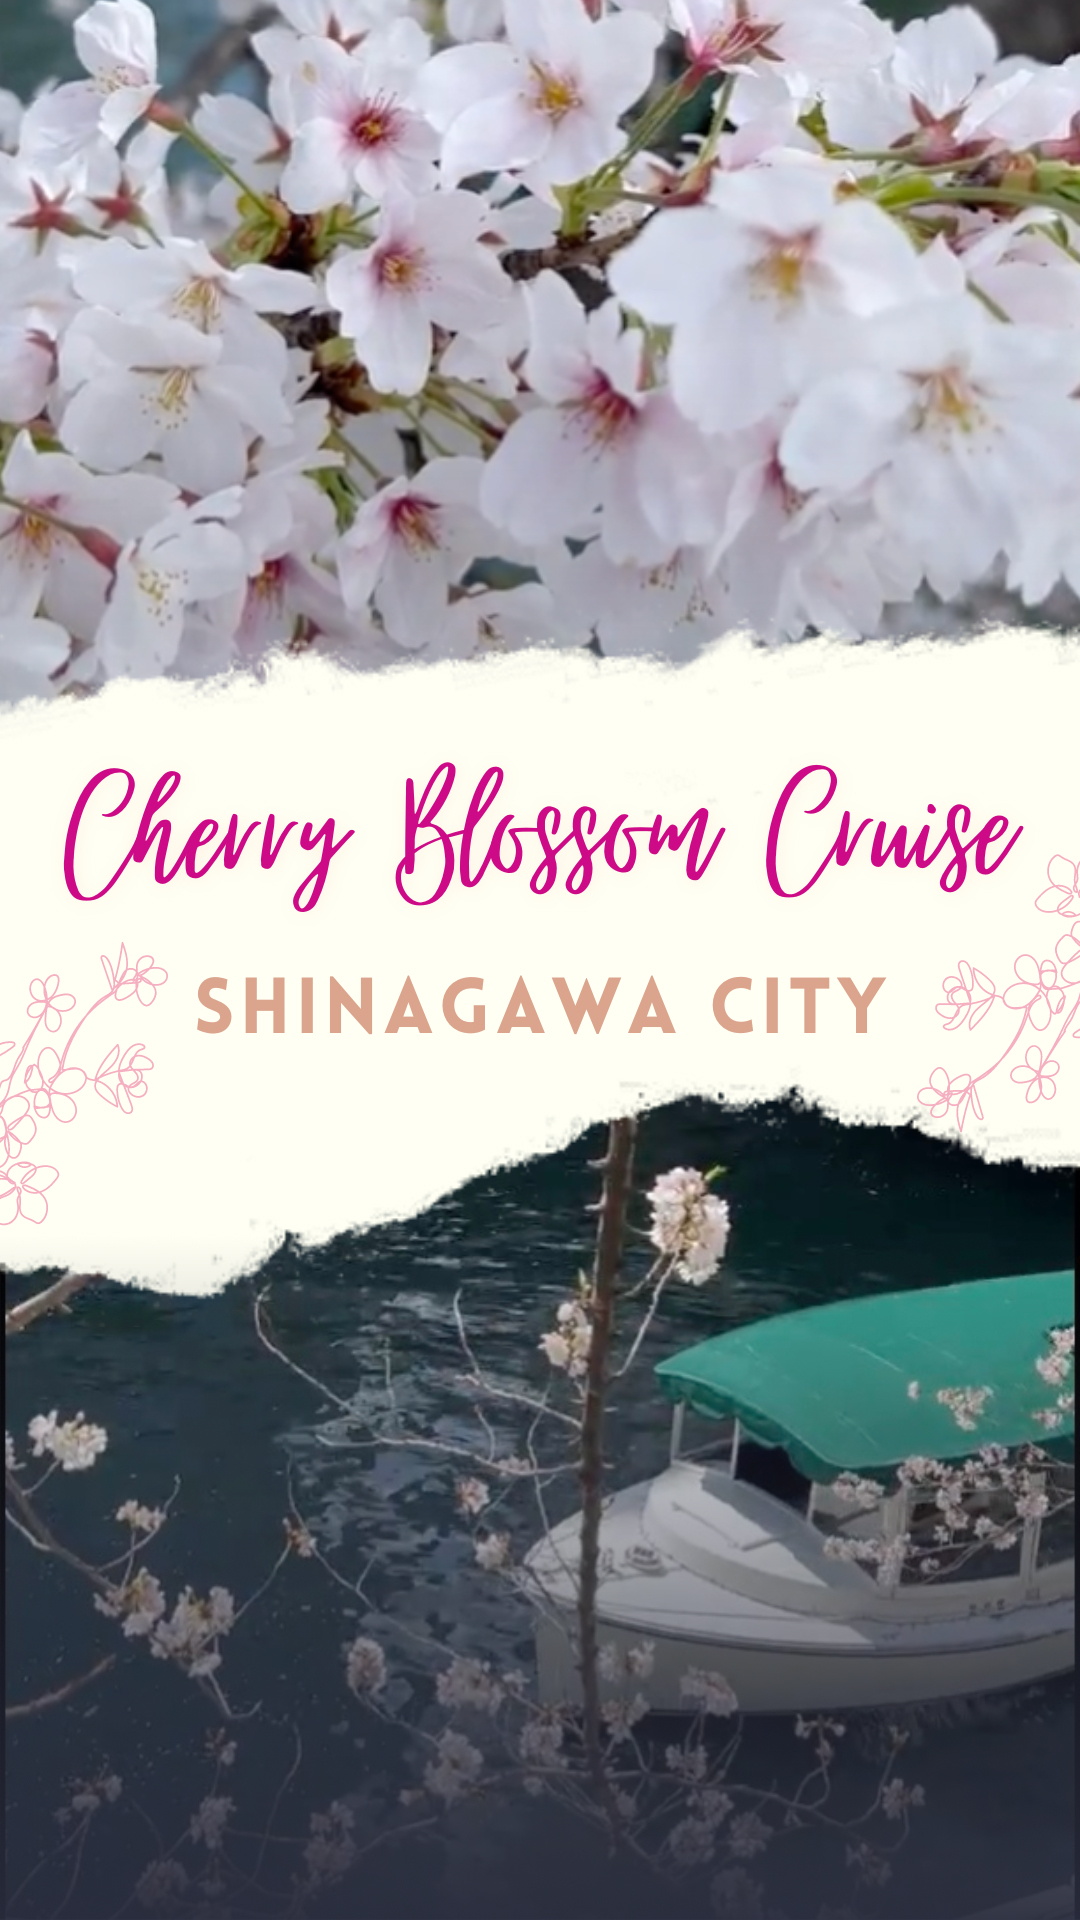 Cherry Blossom Cruise in Shinagawa City